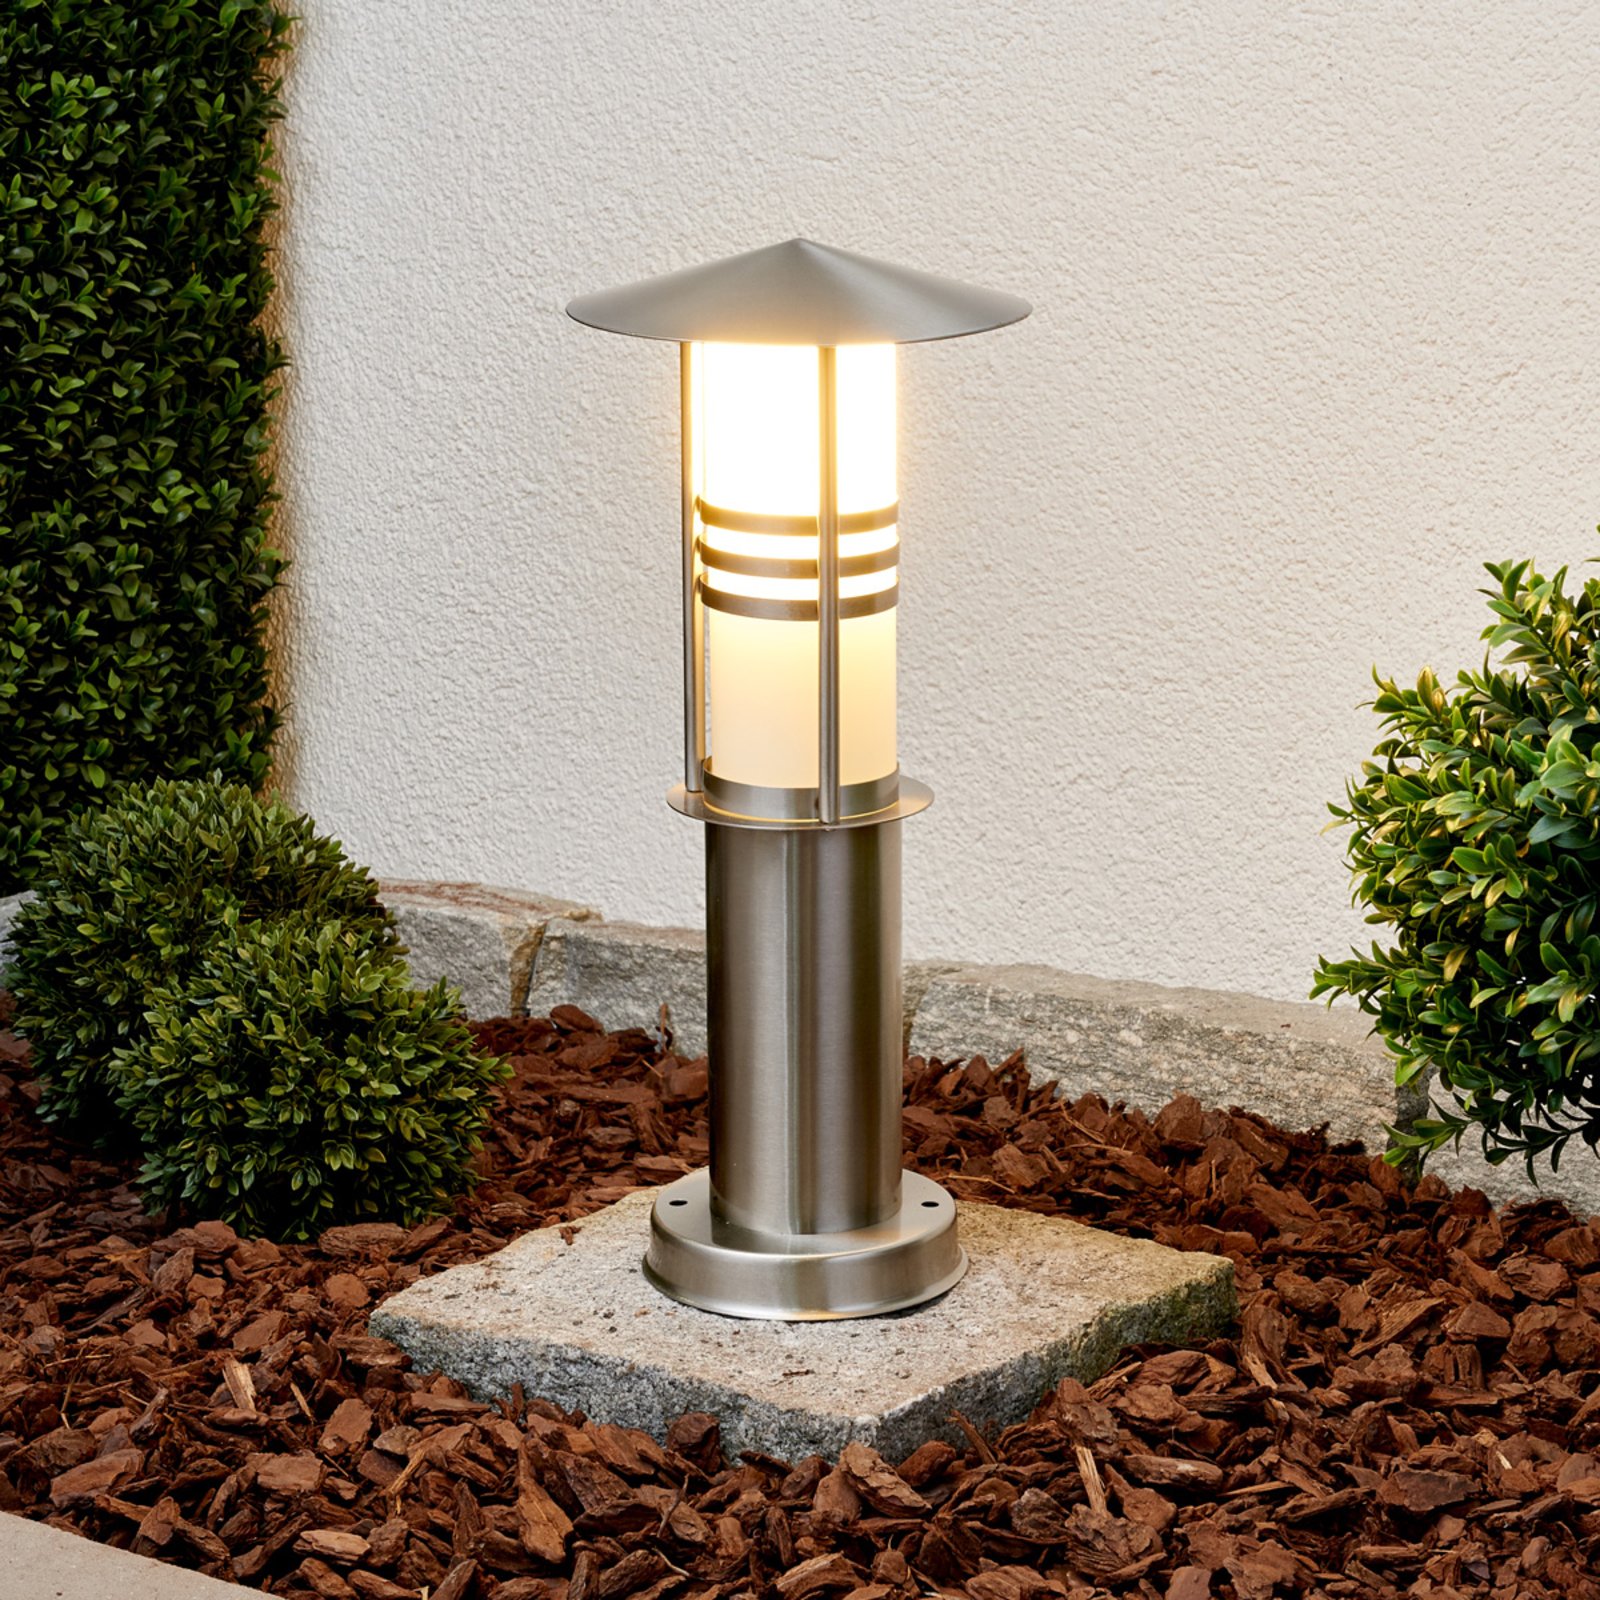 Erina stainless steel pillar light, 40 cm